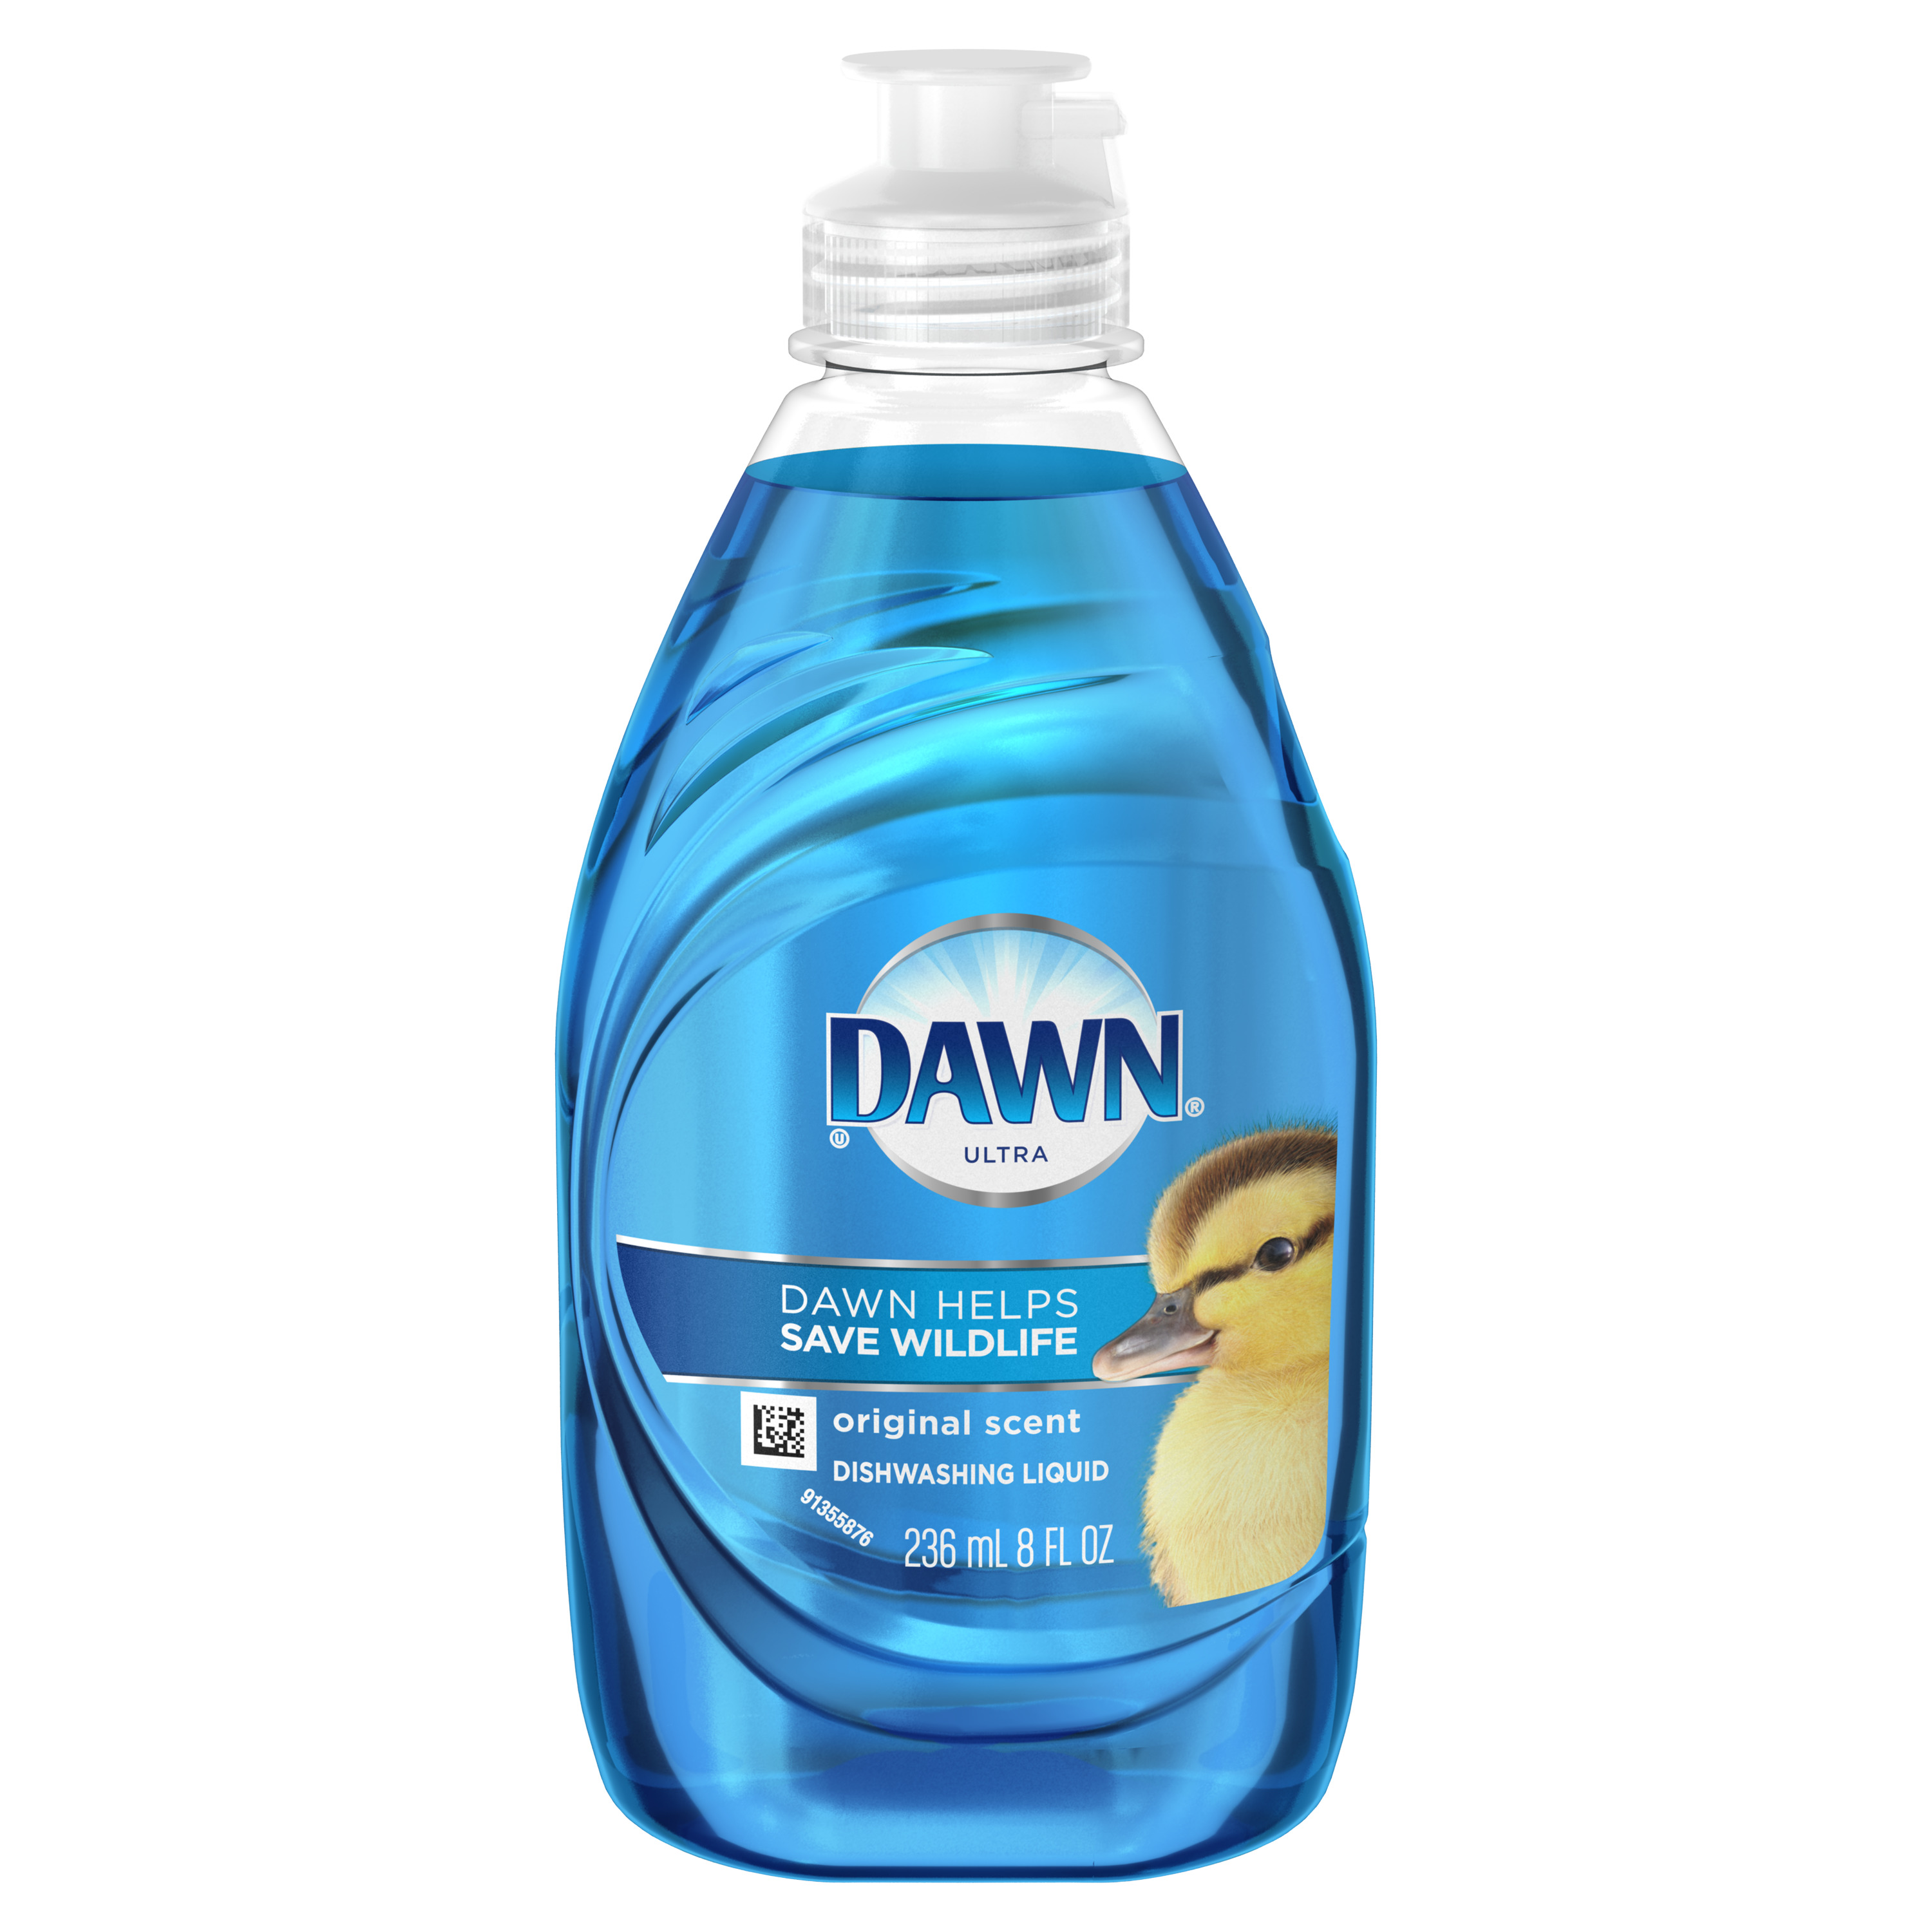 Dawn Ultra Dishwashing Liquid Dish Soap, Original, 8 fl oz